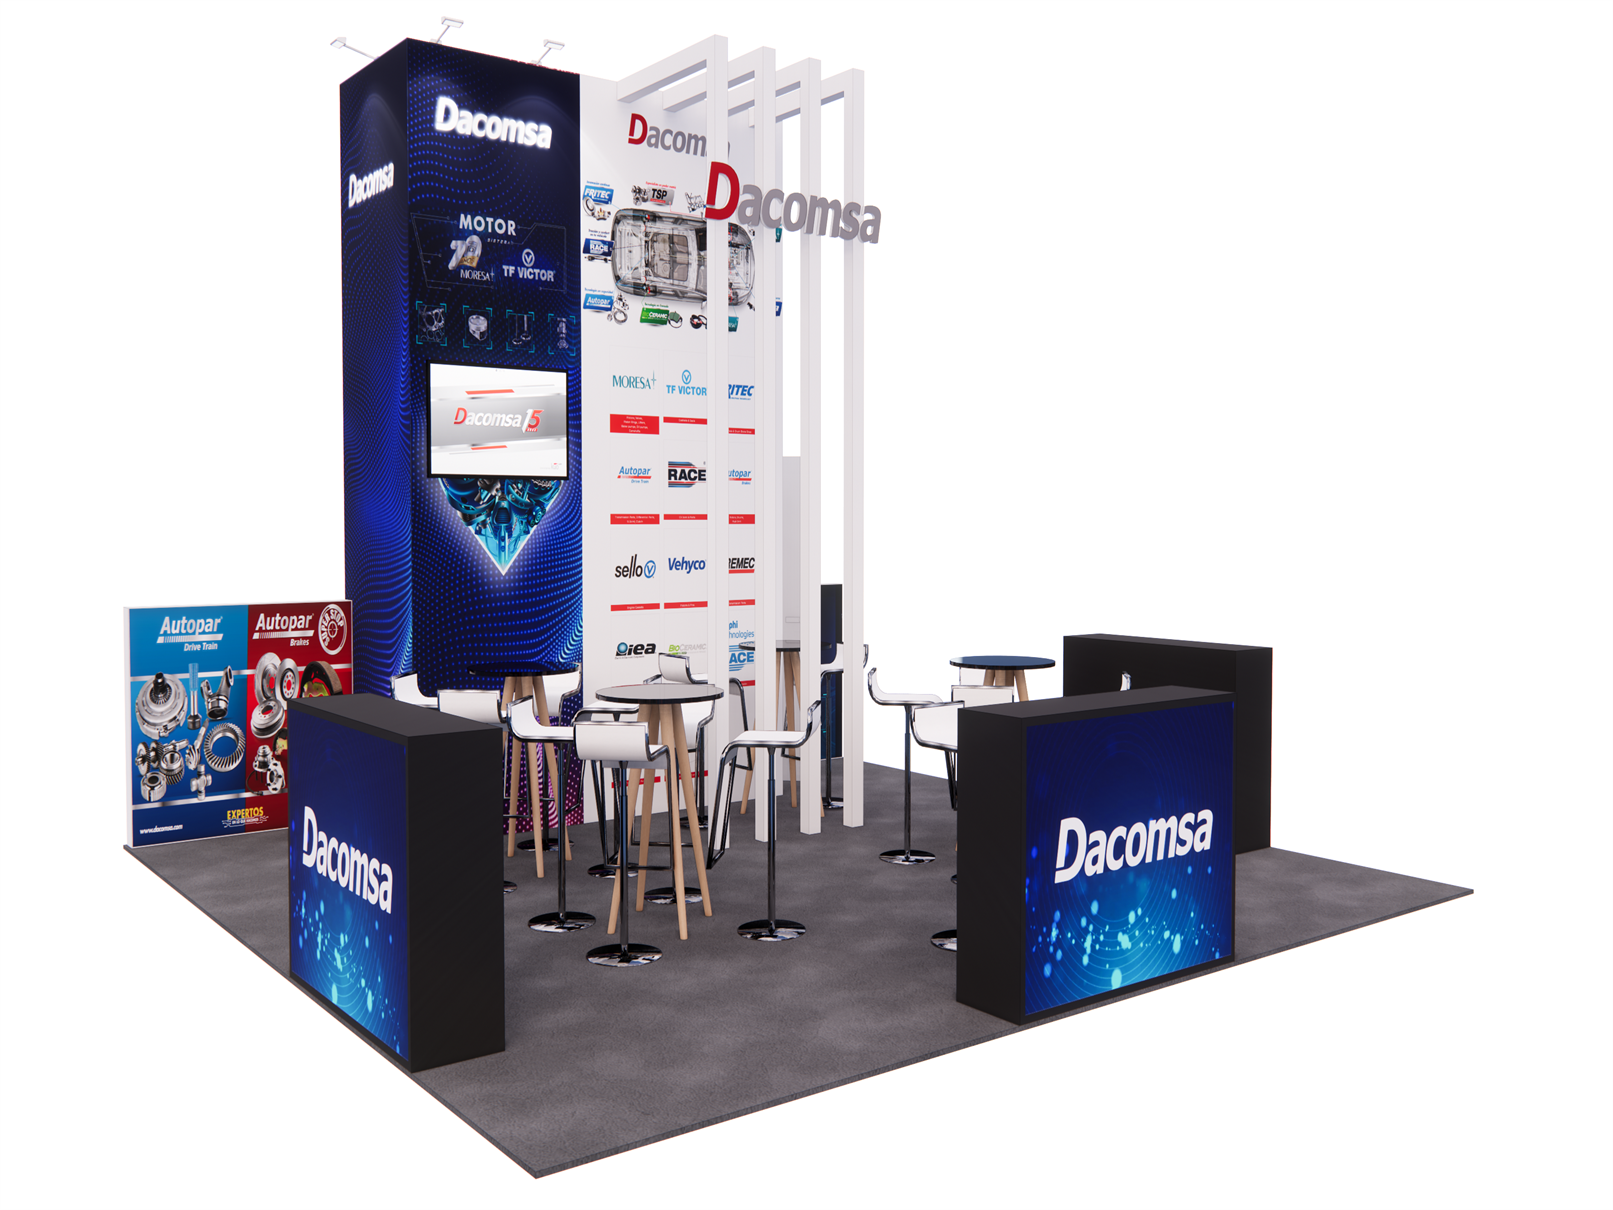 Dacomsa 20 039 X 20 039 Sema Show Booth Design